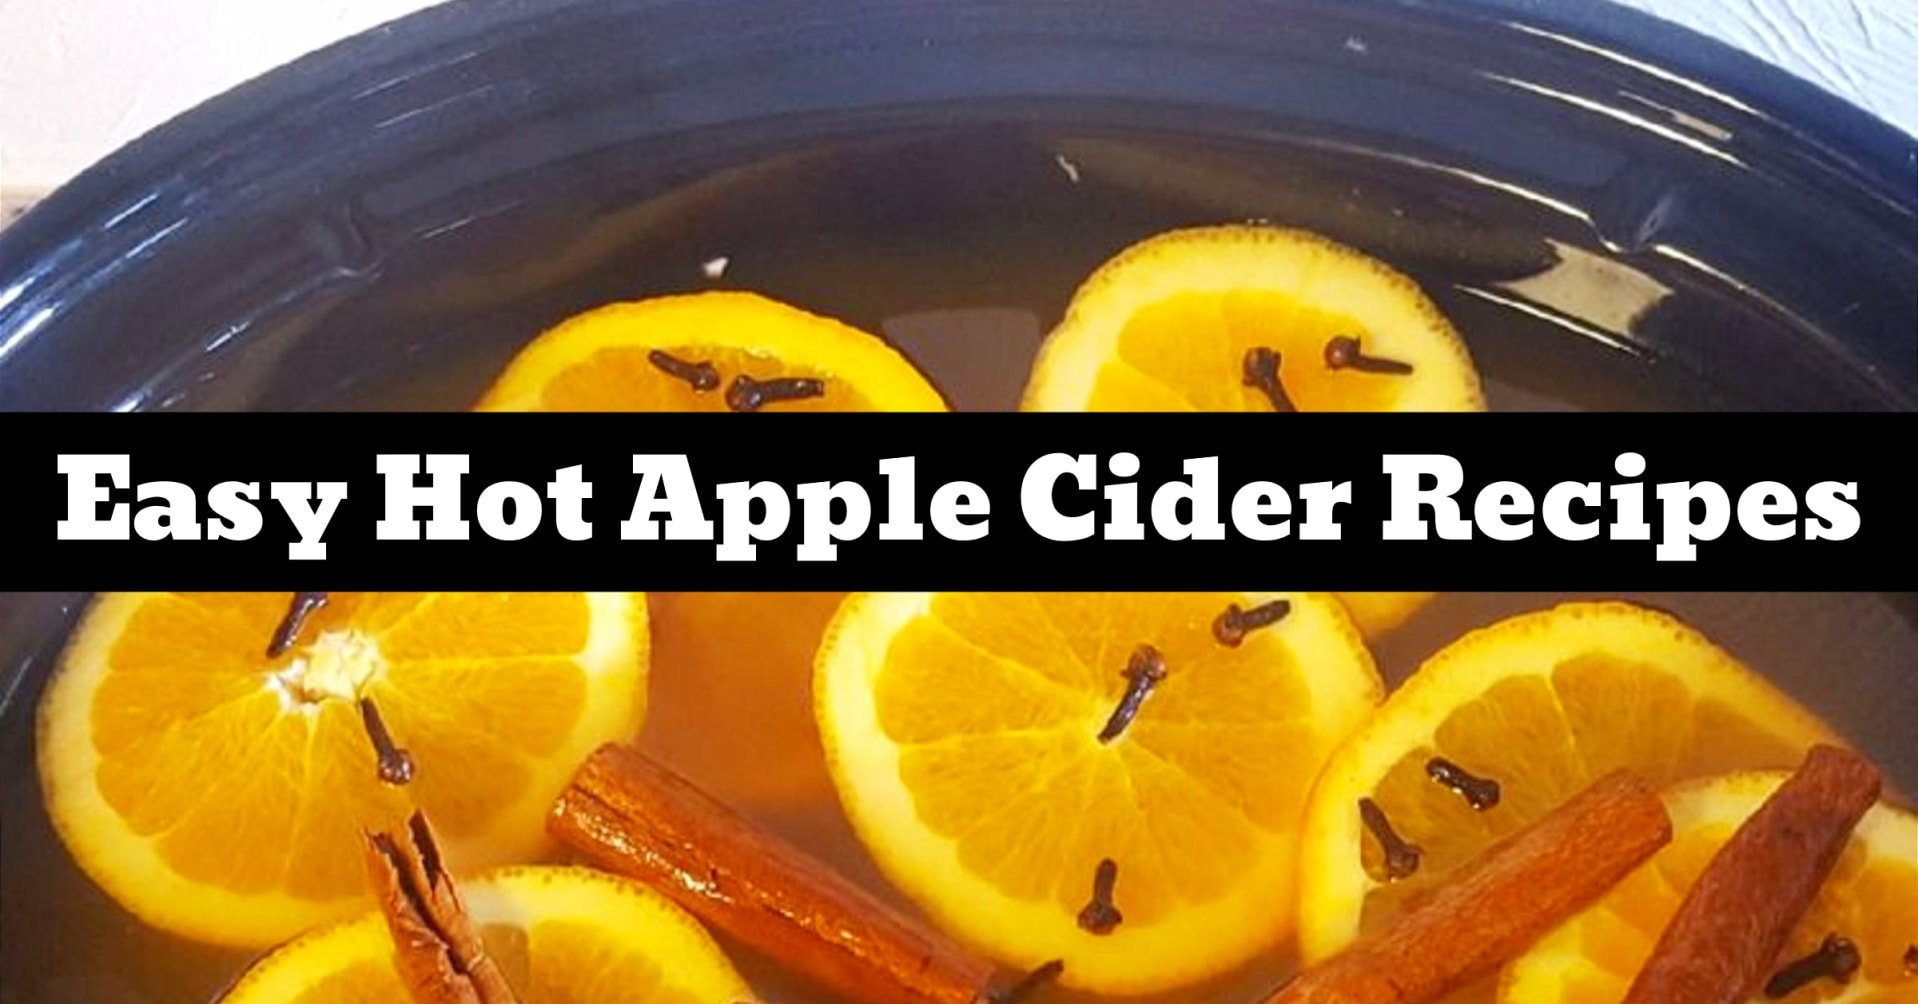 Apple Cider Recipes - Easy Hot Apple Cider Recipes for your Instant Pot, Crockpot or slow cooker